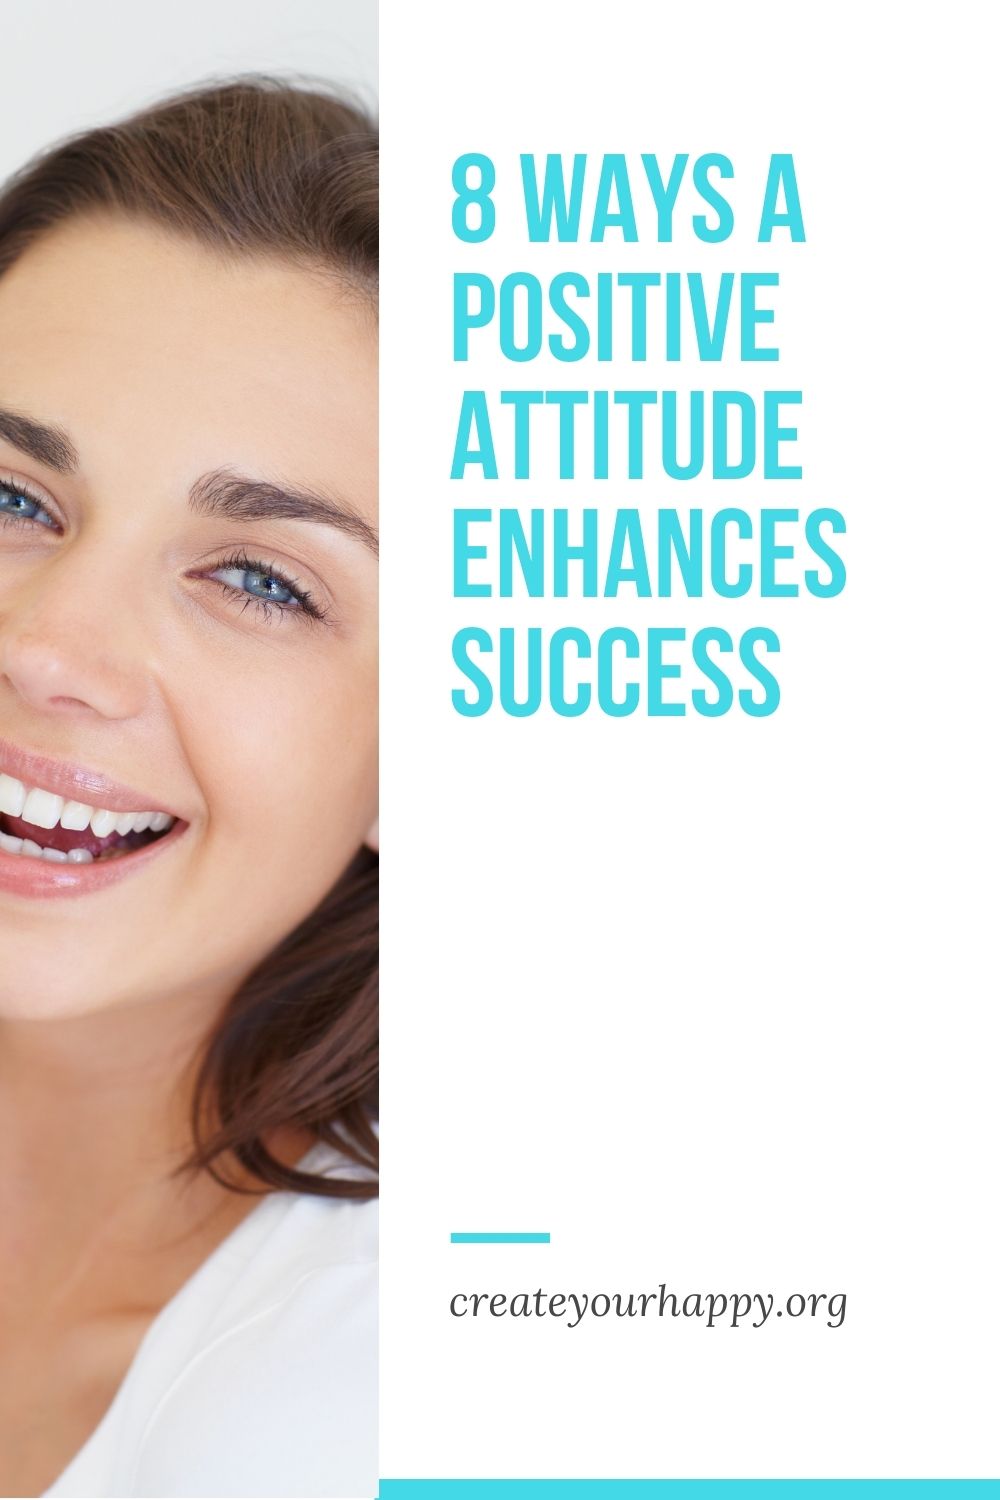 8 Ways A Positive Attitude Enhances Success